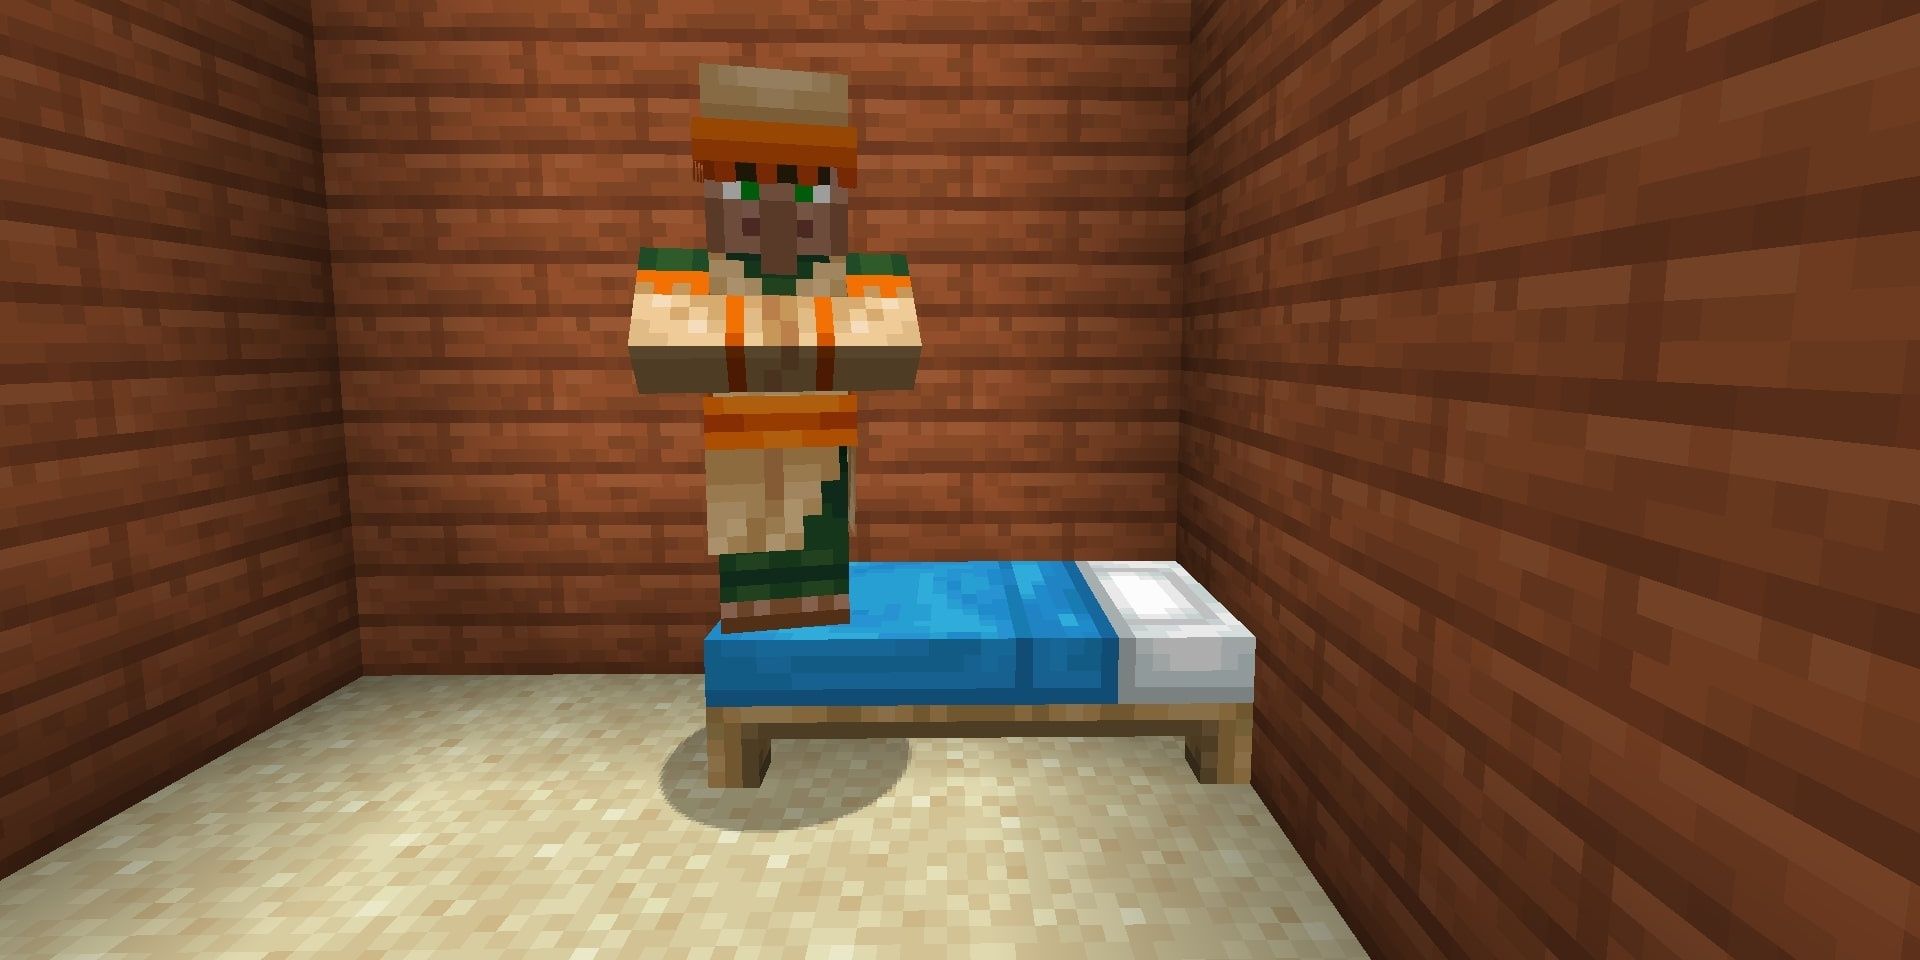 Villager on bed in Minecraft